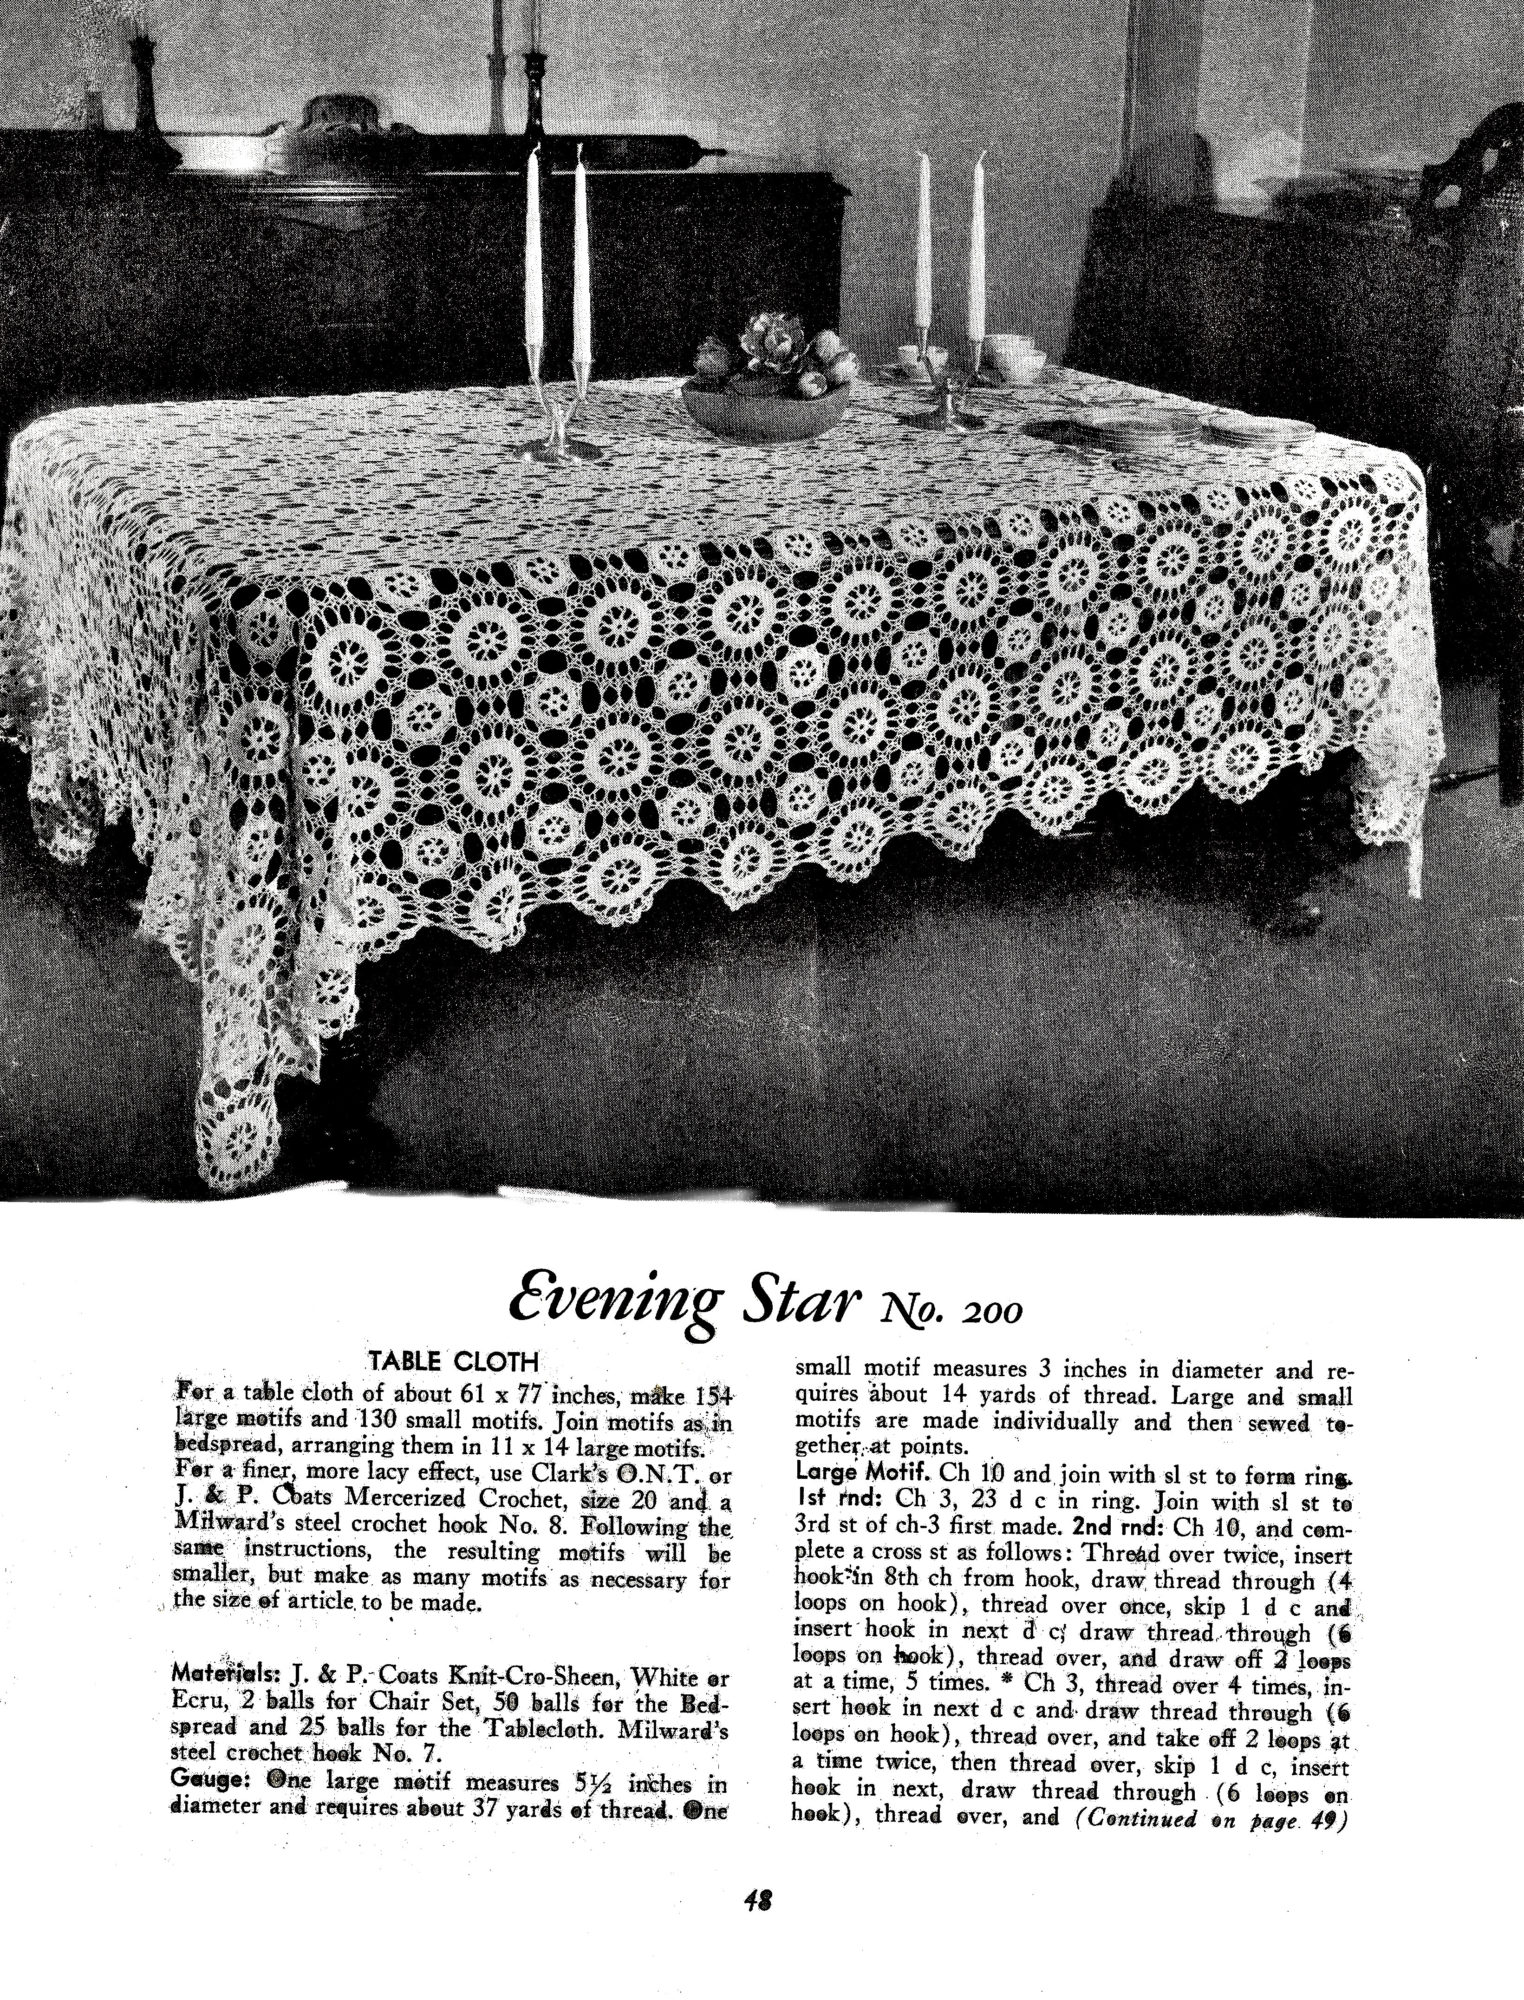 Evening Star Tablecloth